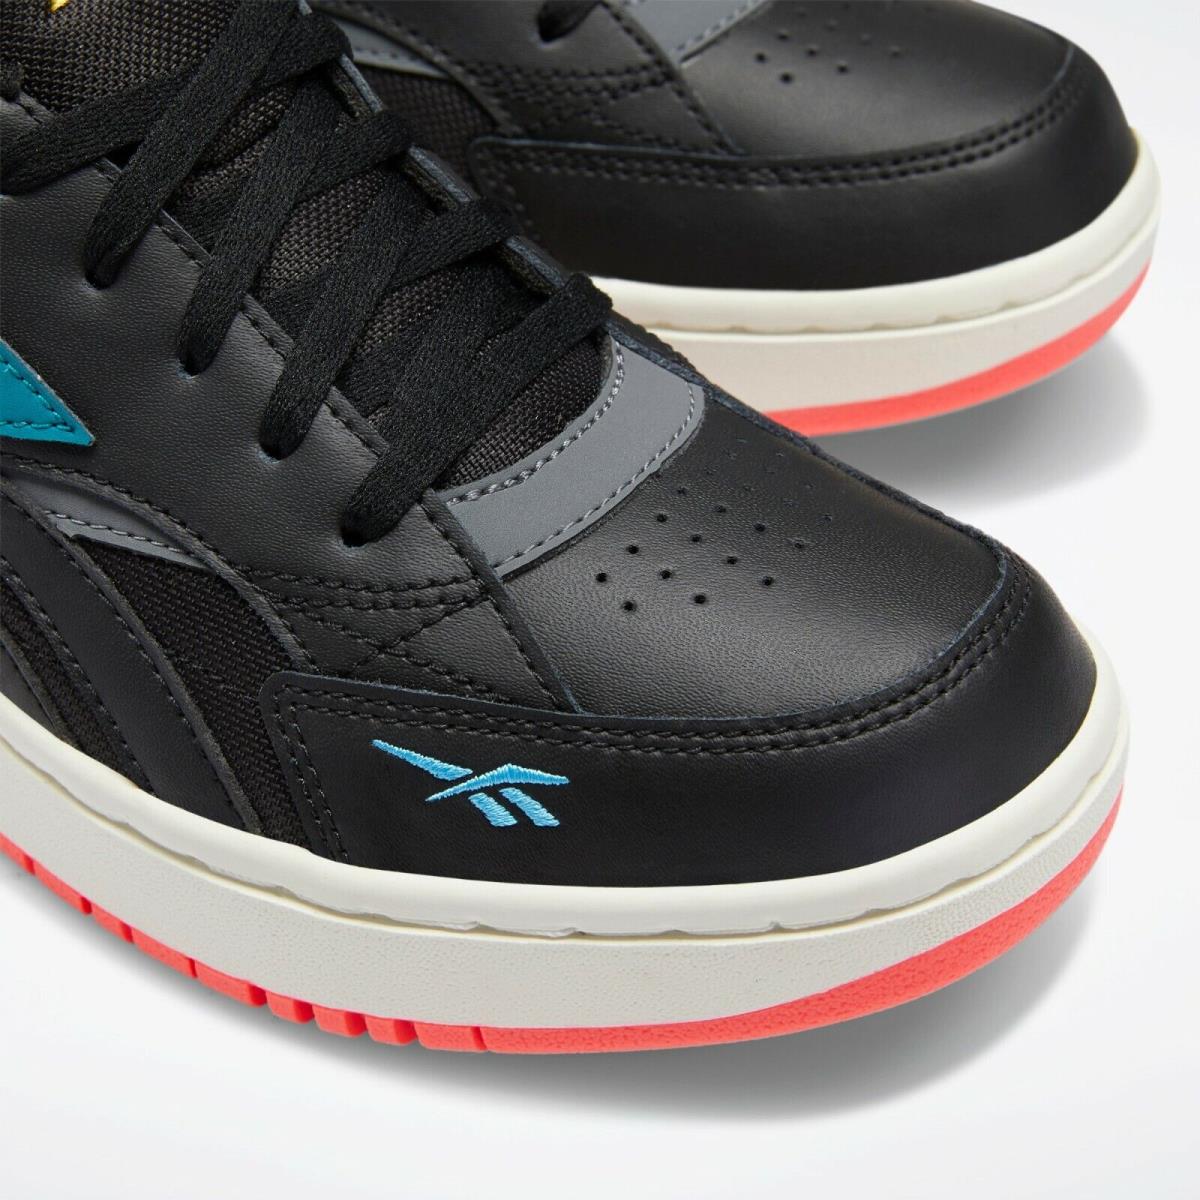 Reebok shoes double court - BLACK / PURE GREY 6 / SEAPORT TEAL , Black/Seaport Teal Manufacturer 7